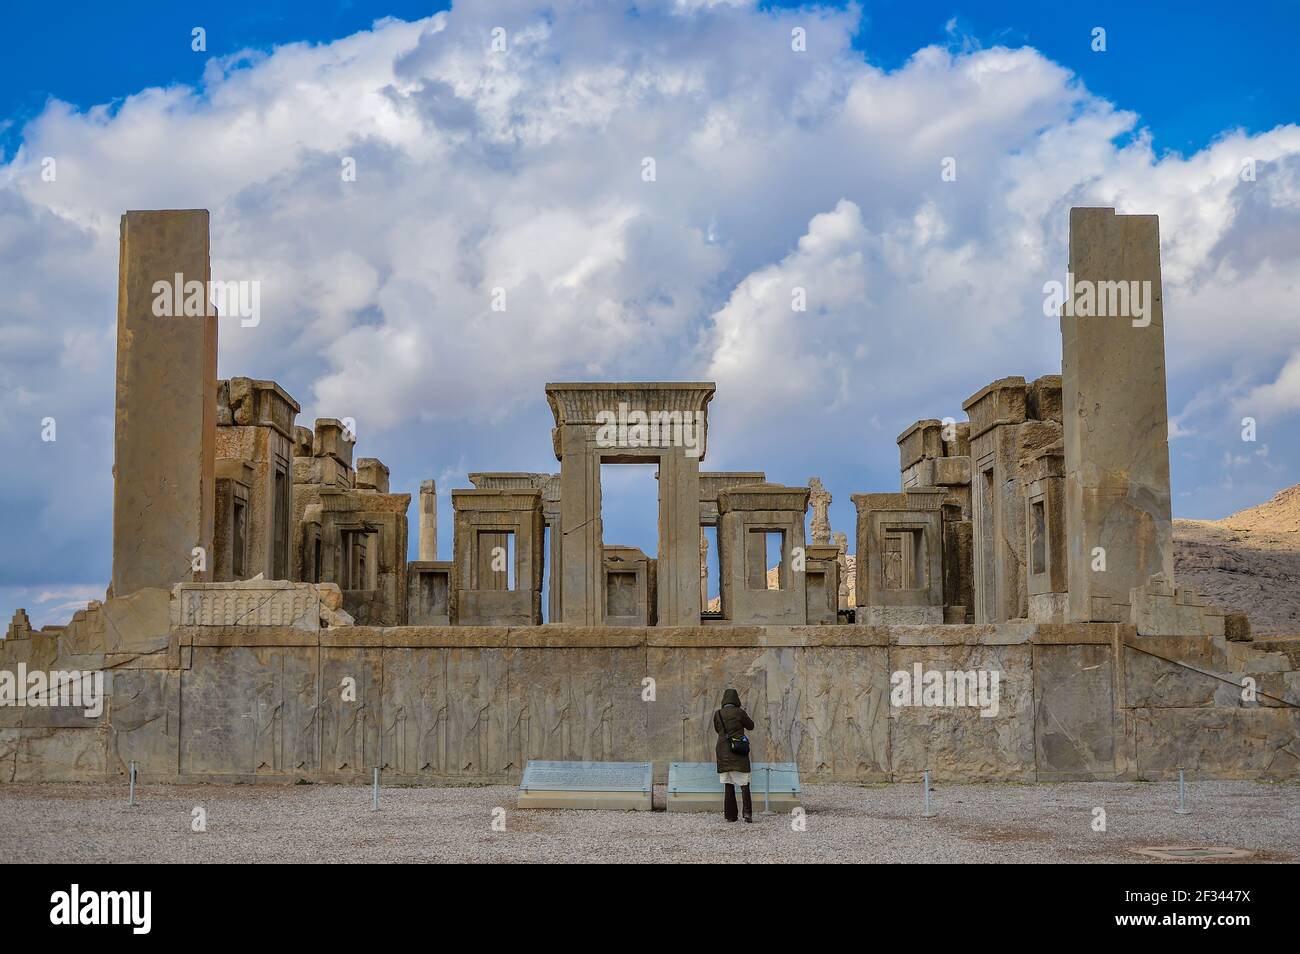 Shiraz, Iran - 15 décembre 2015 : les ruines de Tachara, le palais de Darius le Grand à Persepolis, ancienne capitale de l'empire perse Banque D'Images